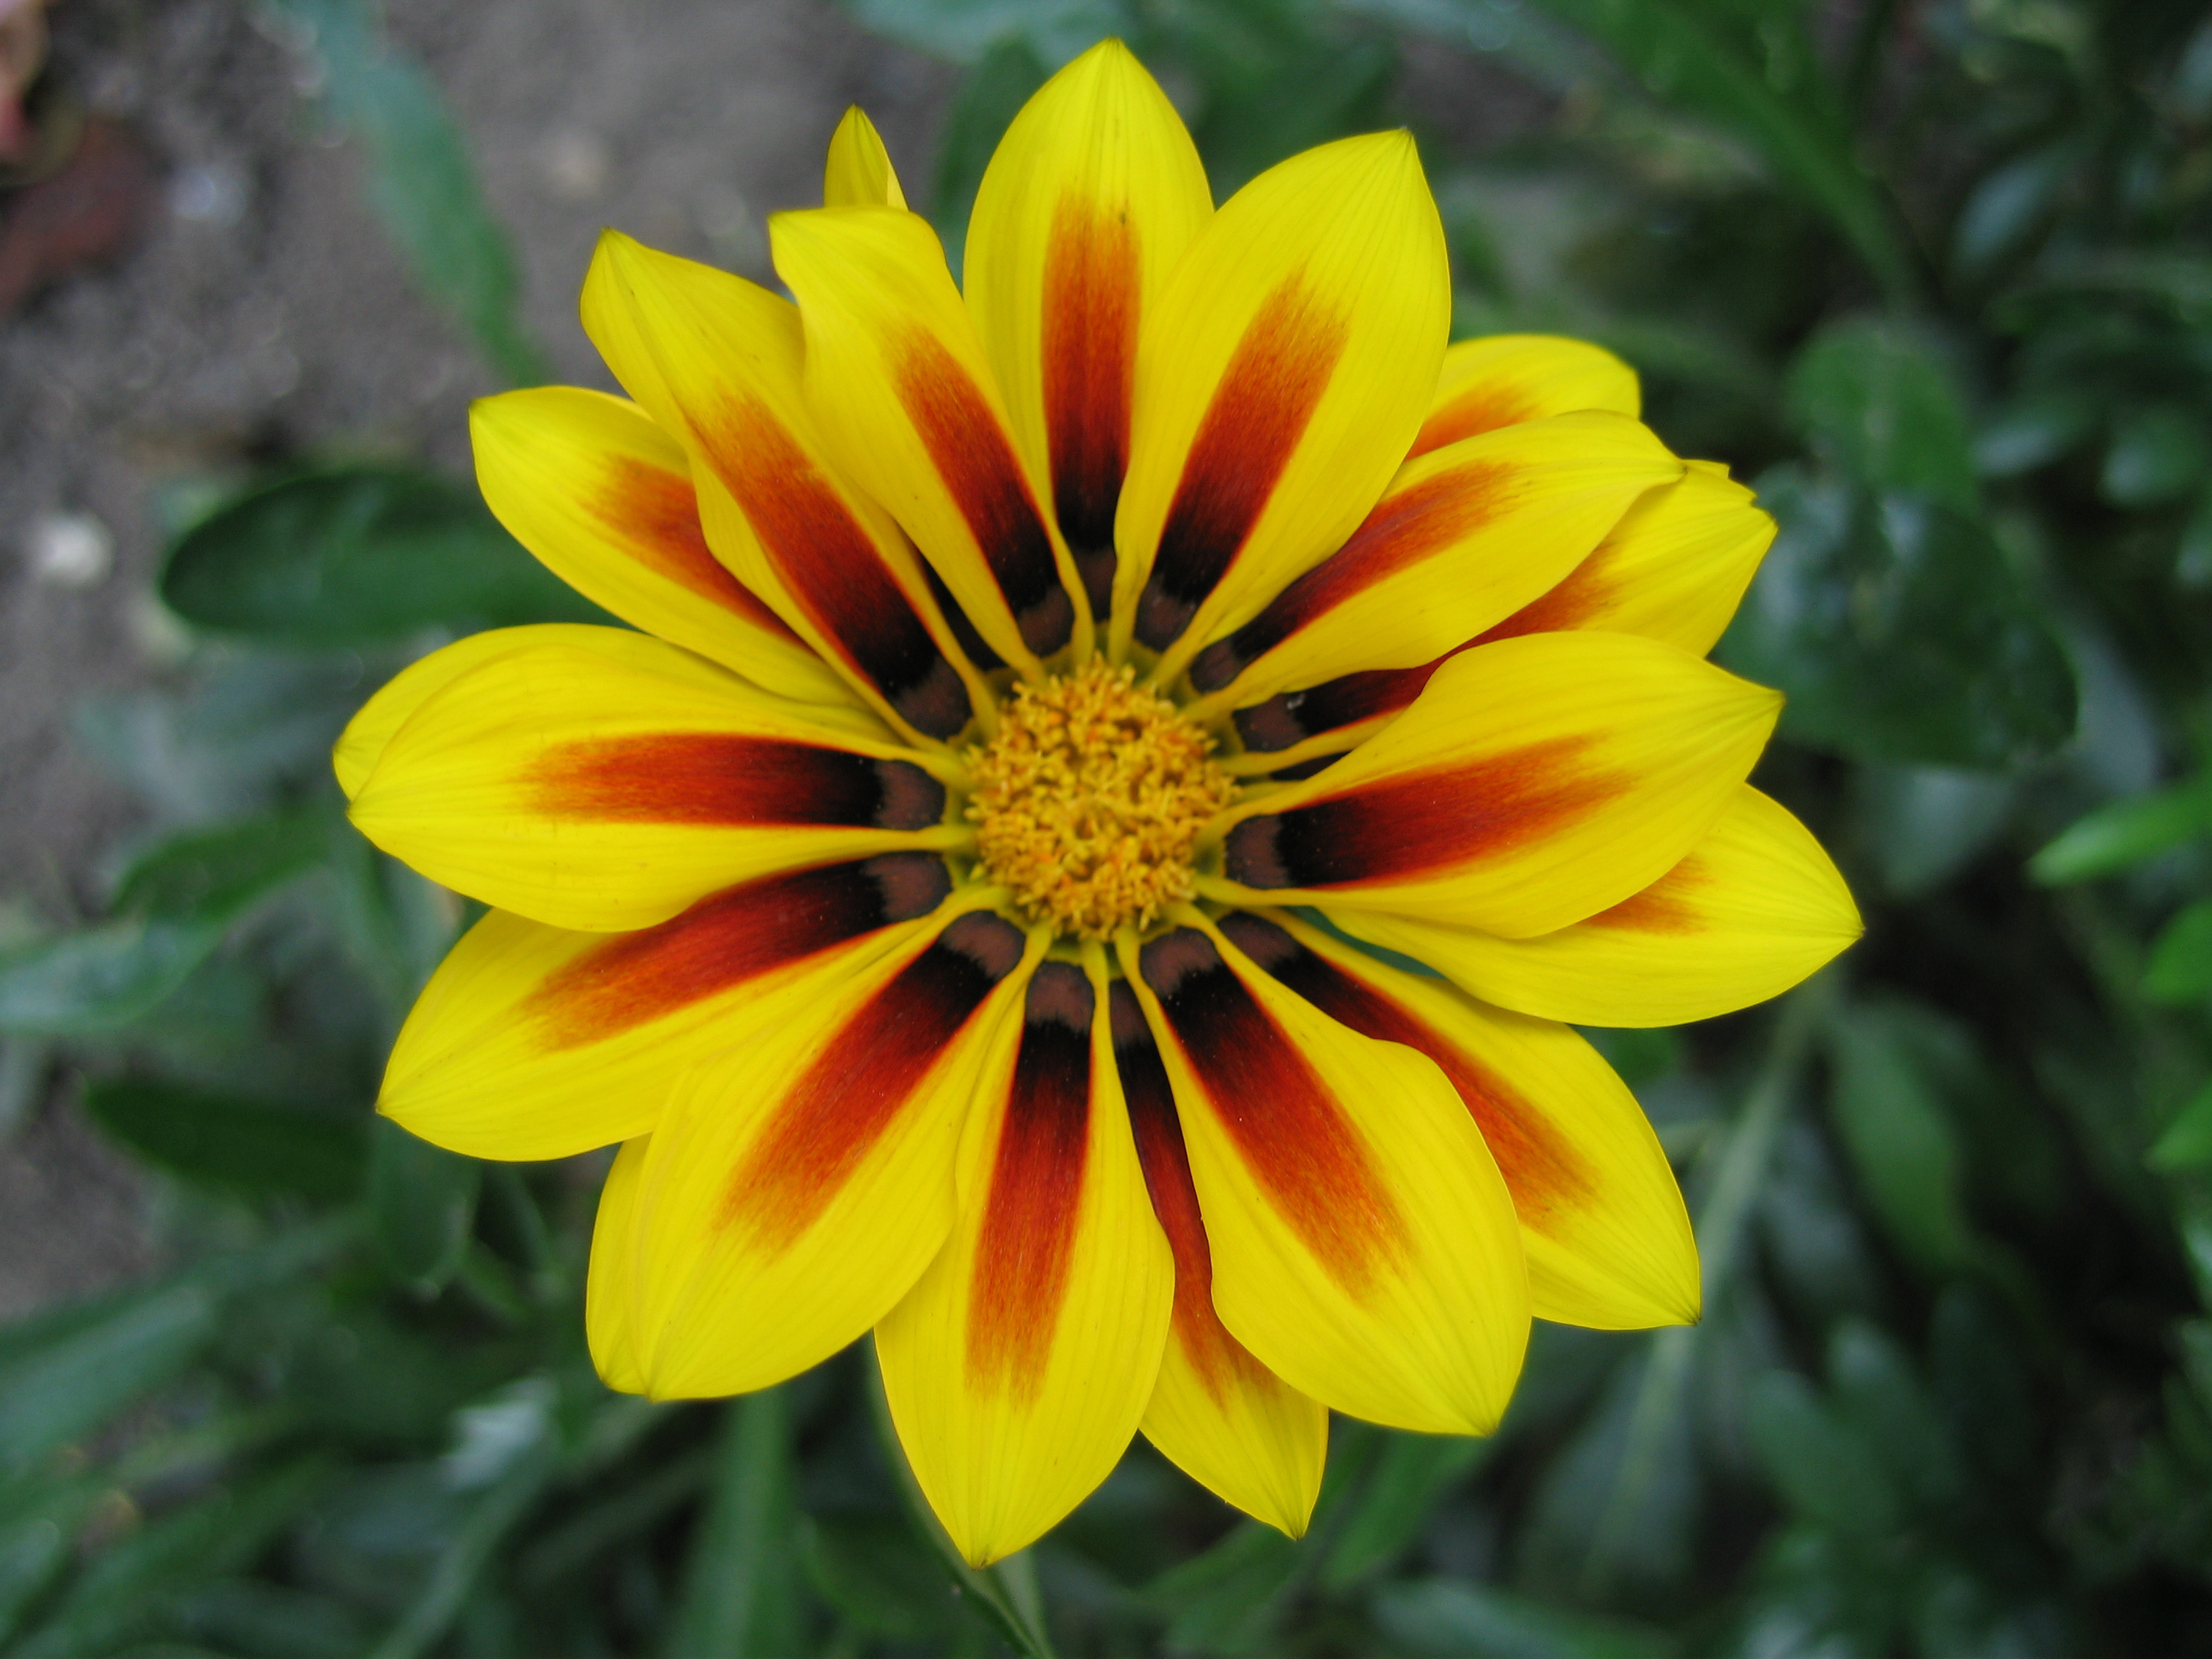 Flowers: Gazania-yellow-orange-striped-daisy-like-flower-closeup-